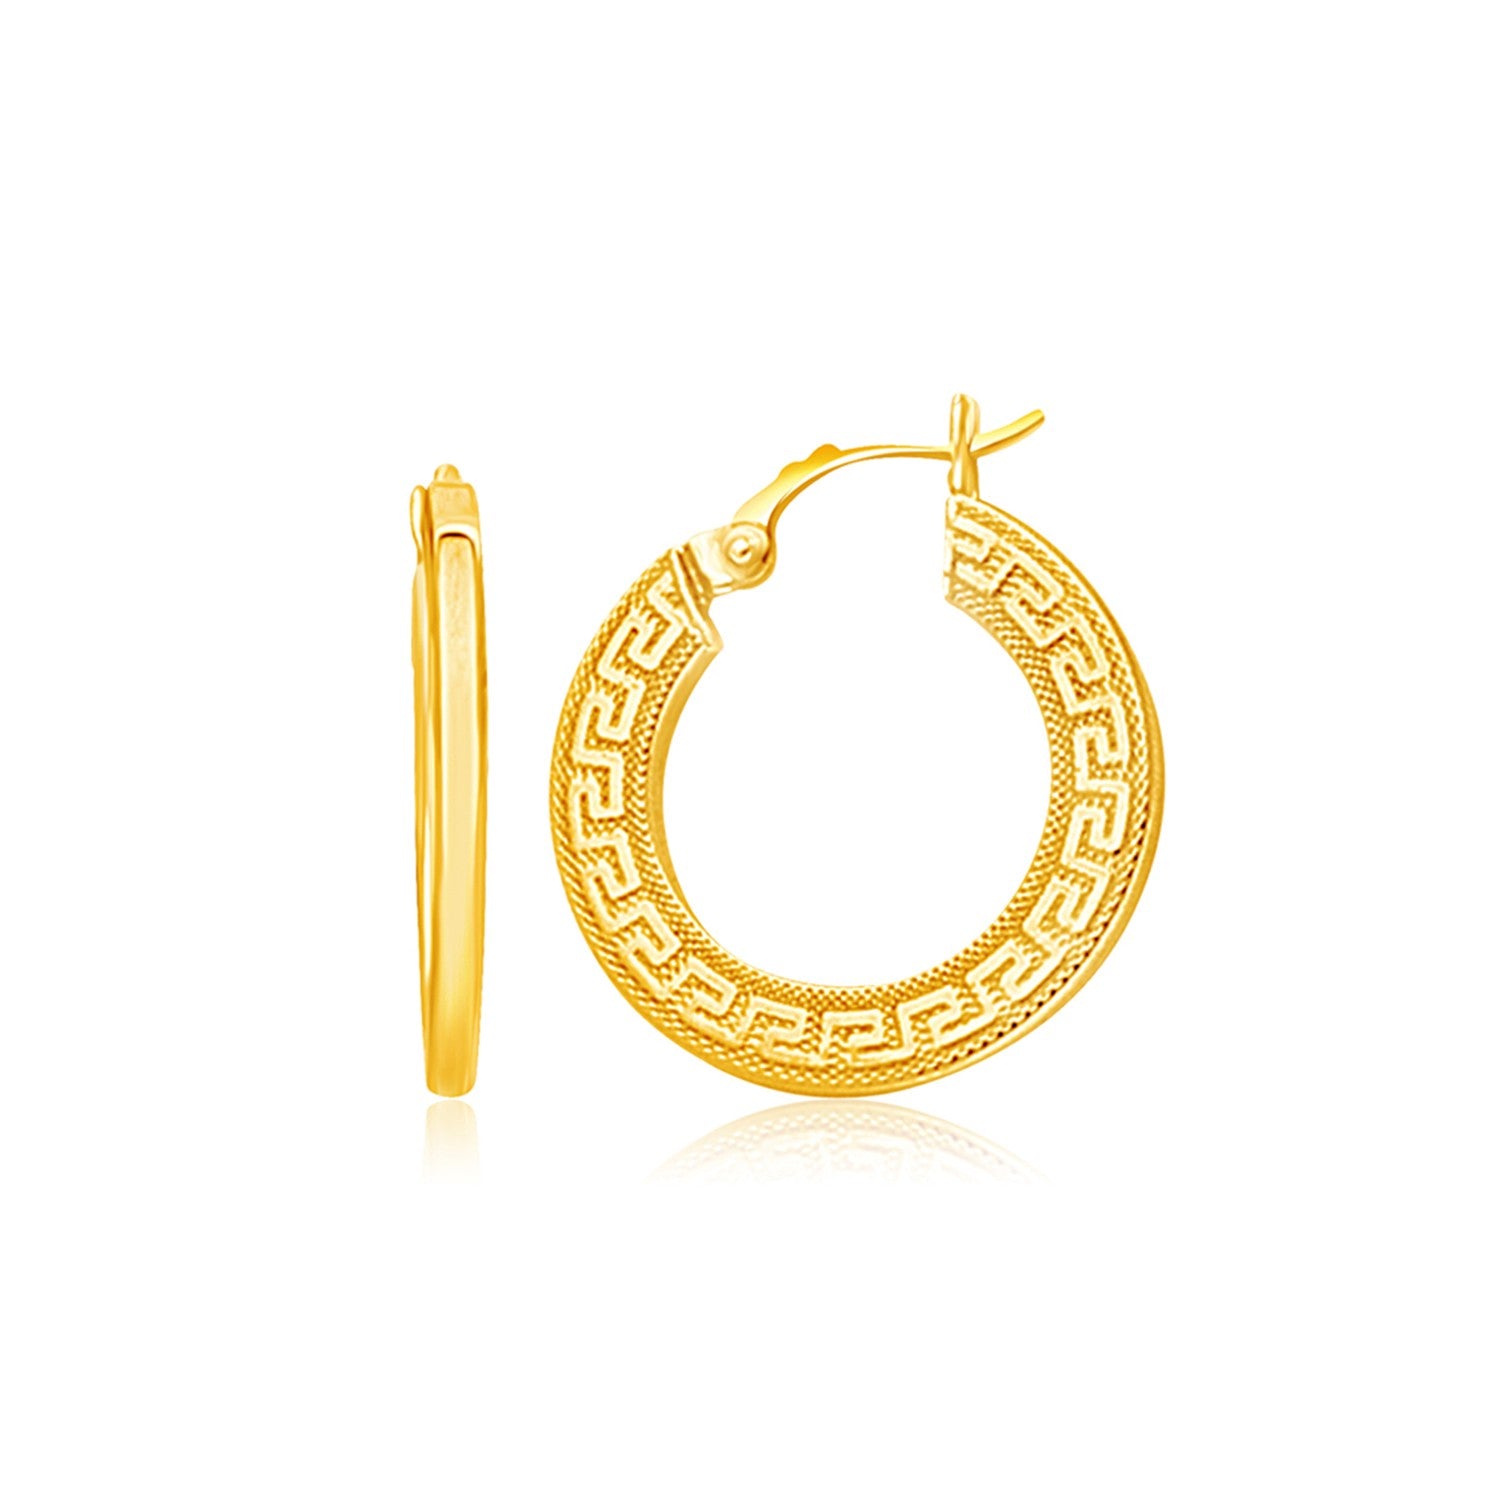 14k Yellow Gold Greek Key Medium Hoop Earrings with Flat Sides